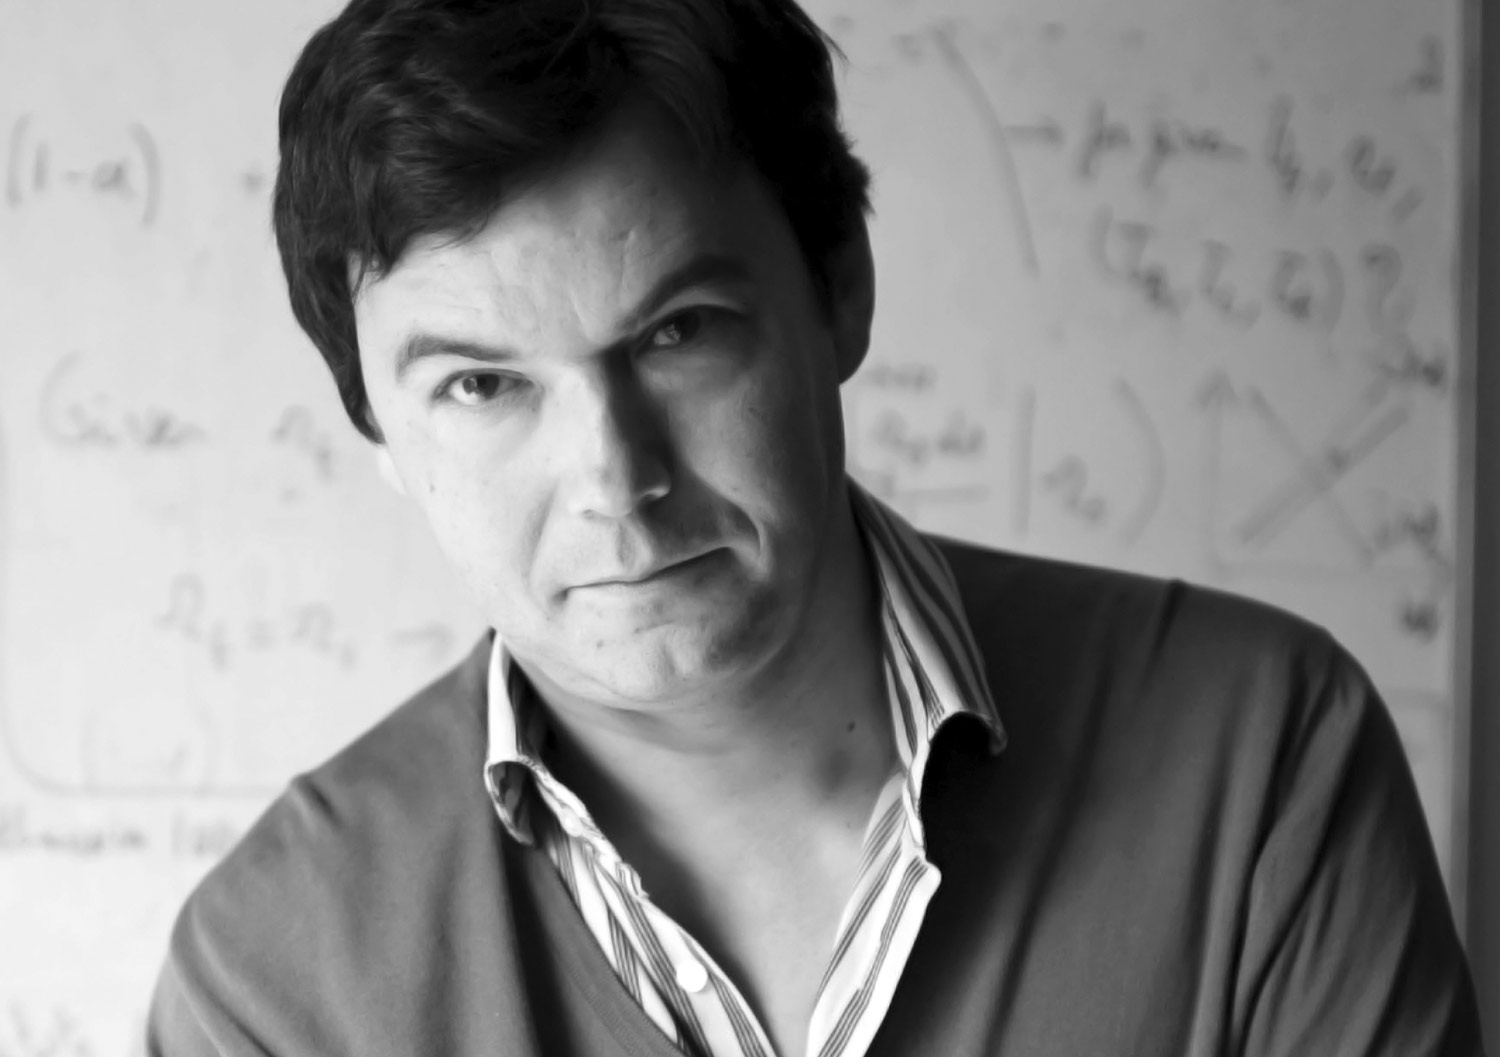 [VIDEO] Thomas Piketty: Is Inequality Inevitable?